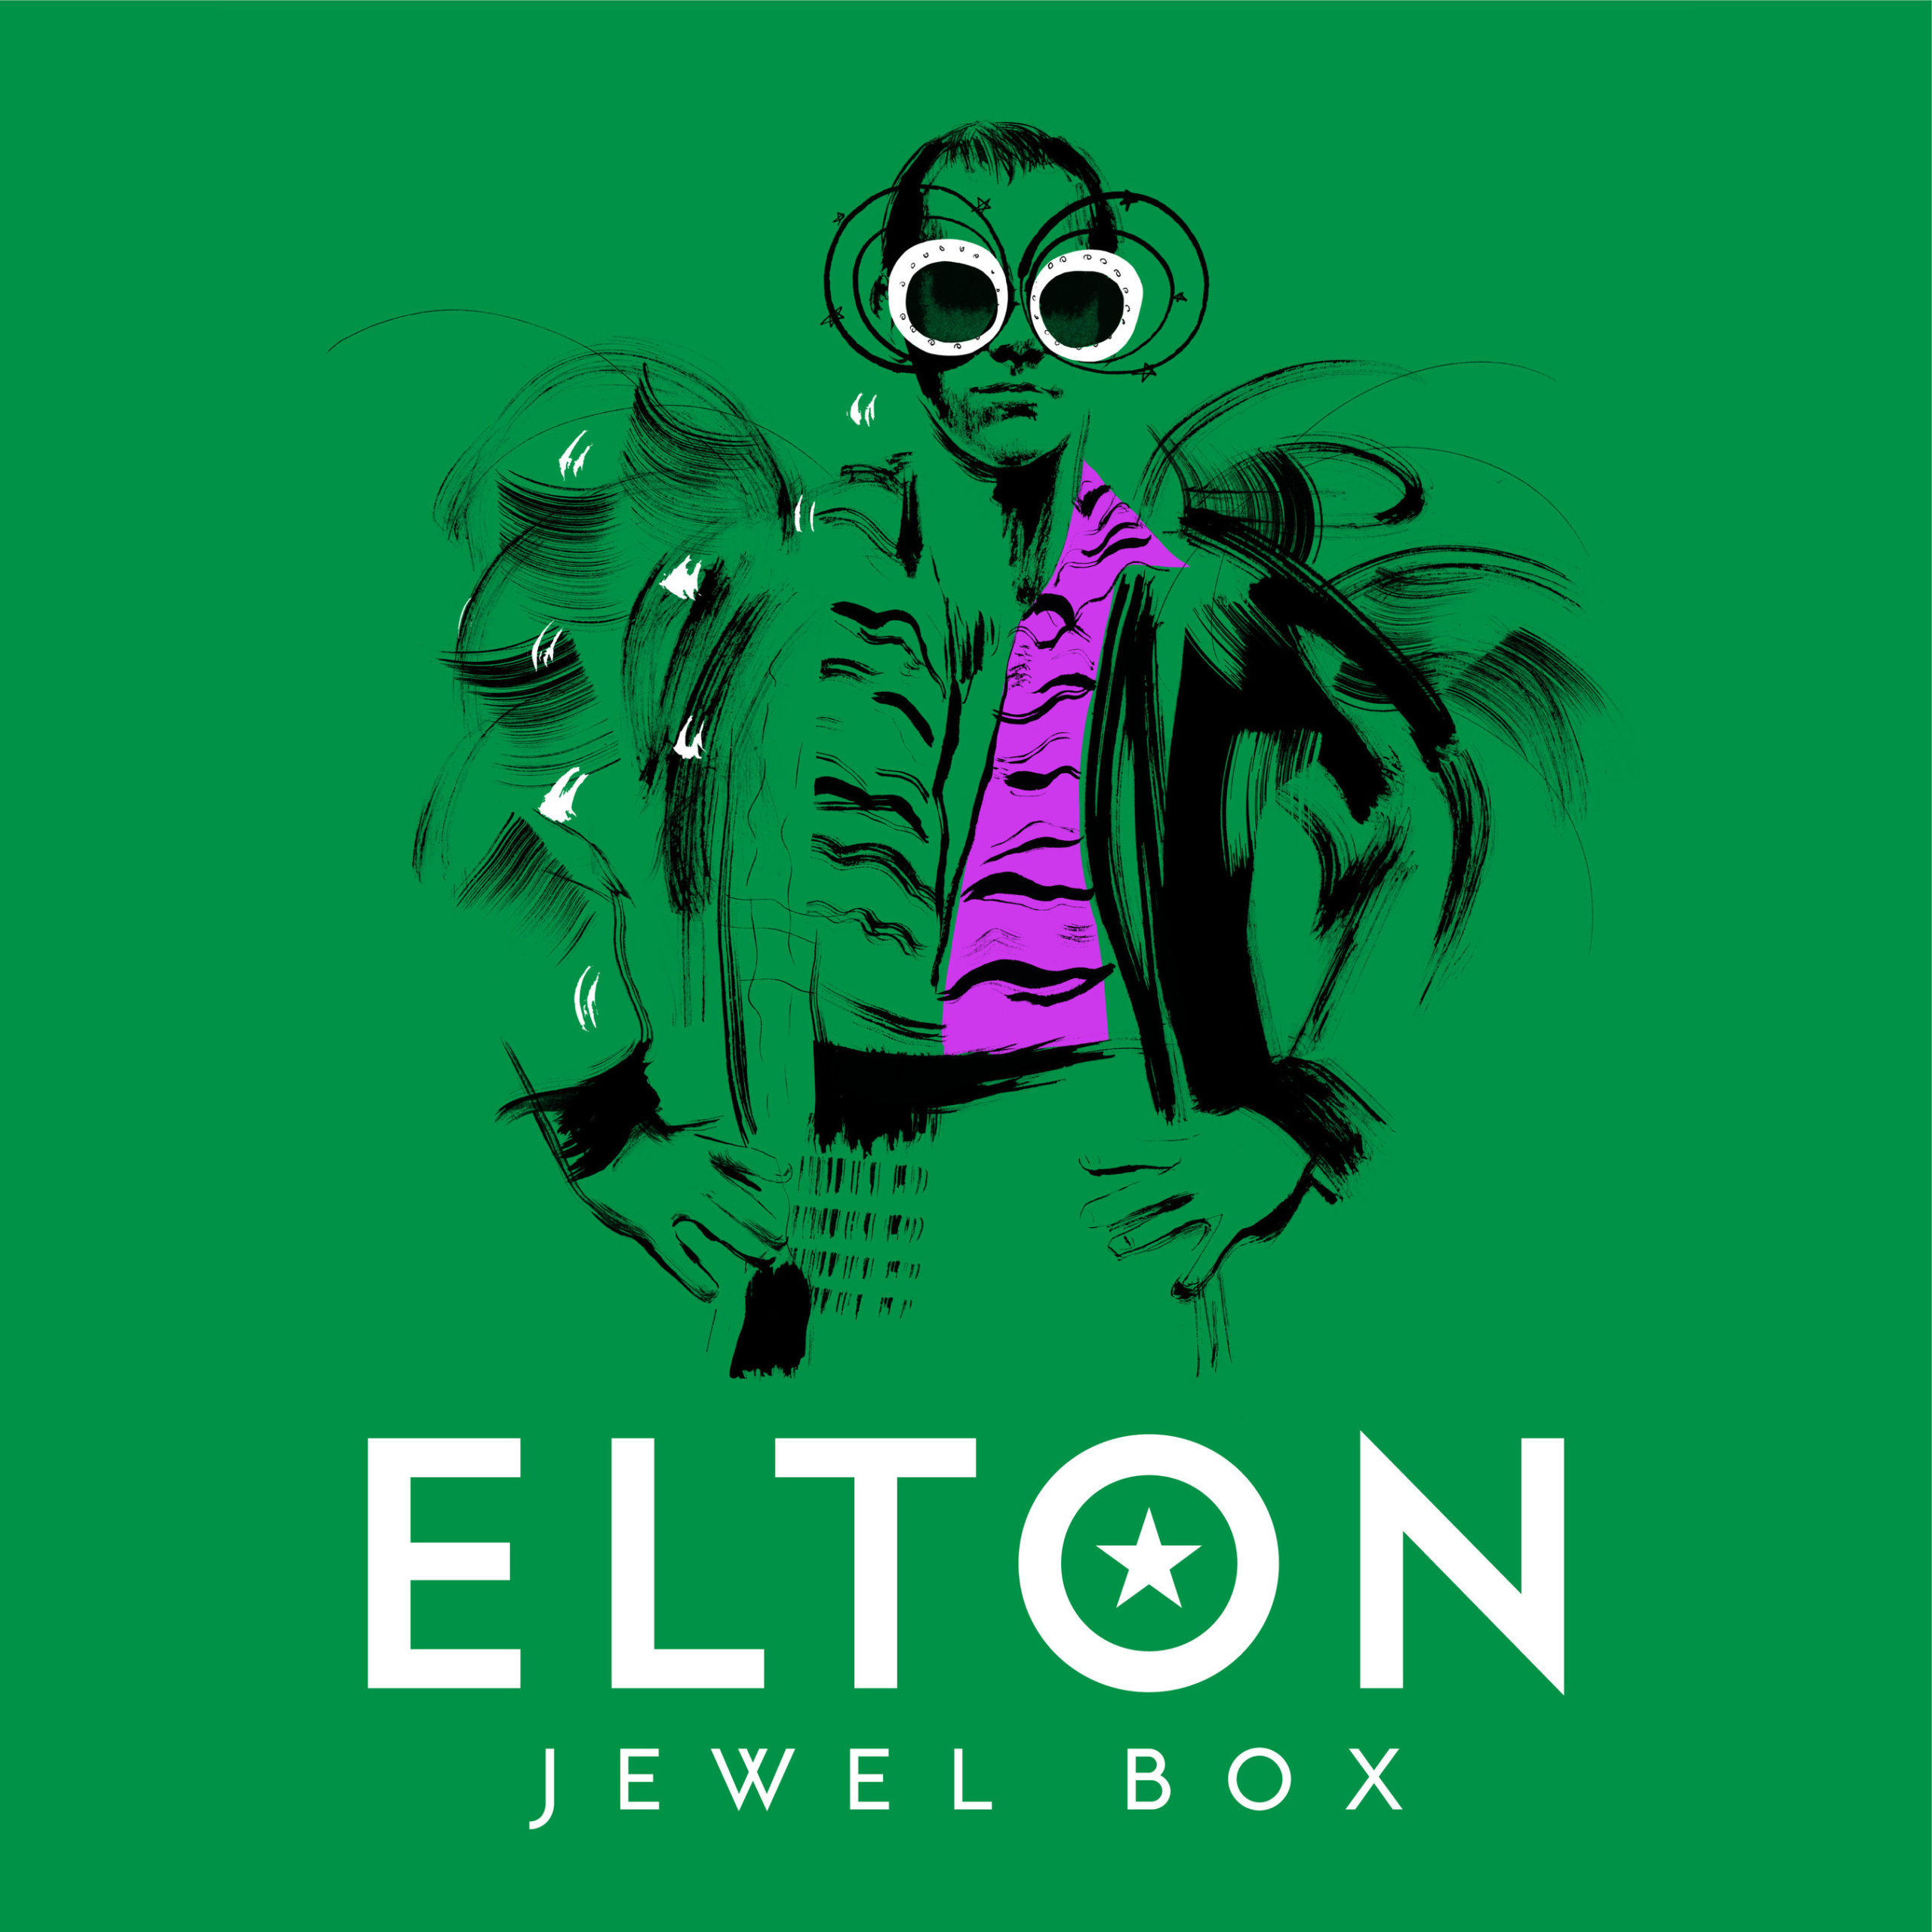 FLOOD - Elton John, “Jewel Box”